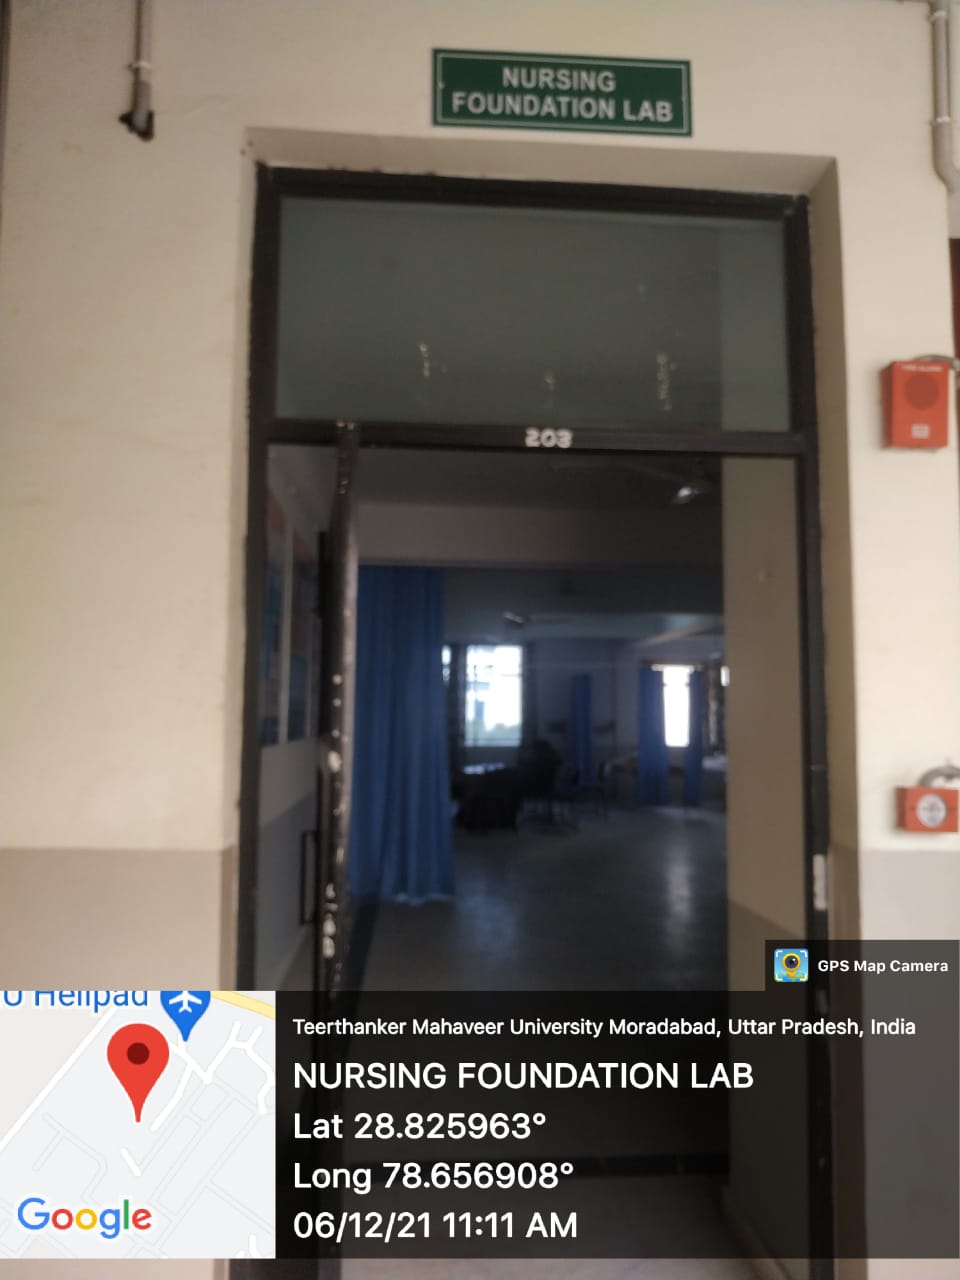 TMU Nursing OBG Lab